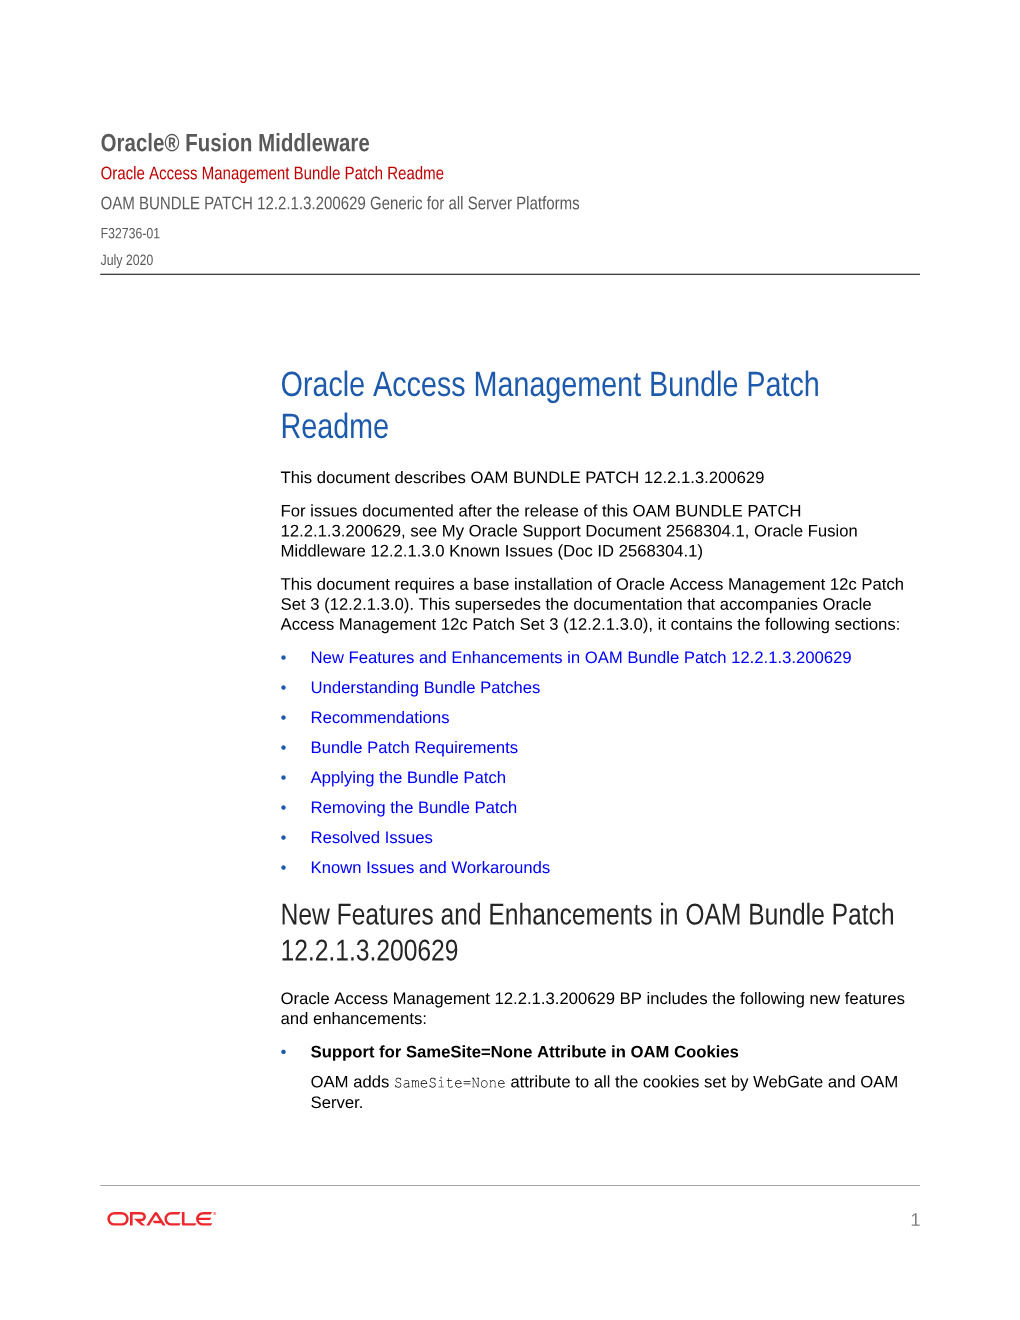 Oracle Access Management Bundle Patch Readme OAM BUNDLE PATCH 12.2.1.3.200629 Generic for All Server Platforms F32736-01 July 2020